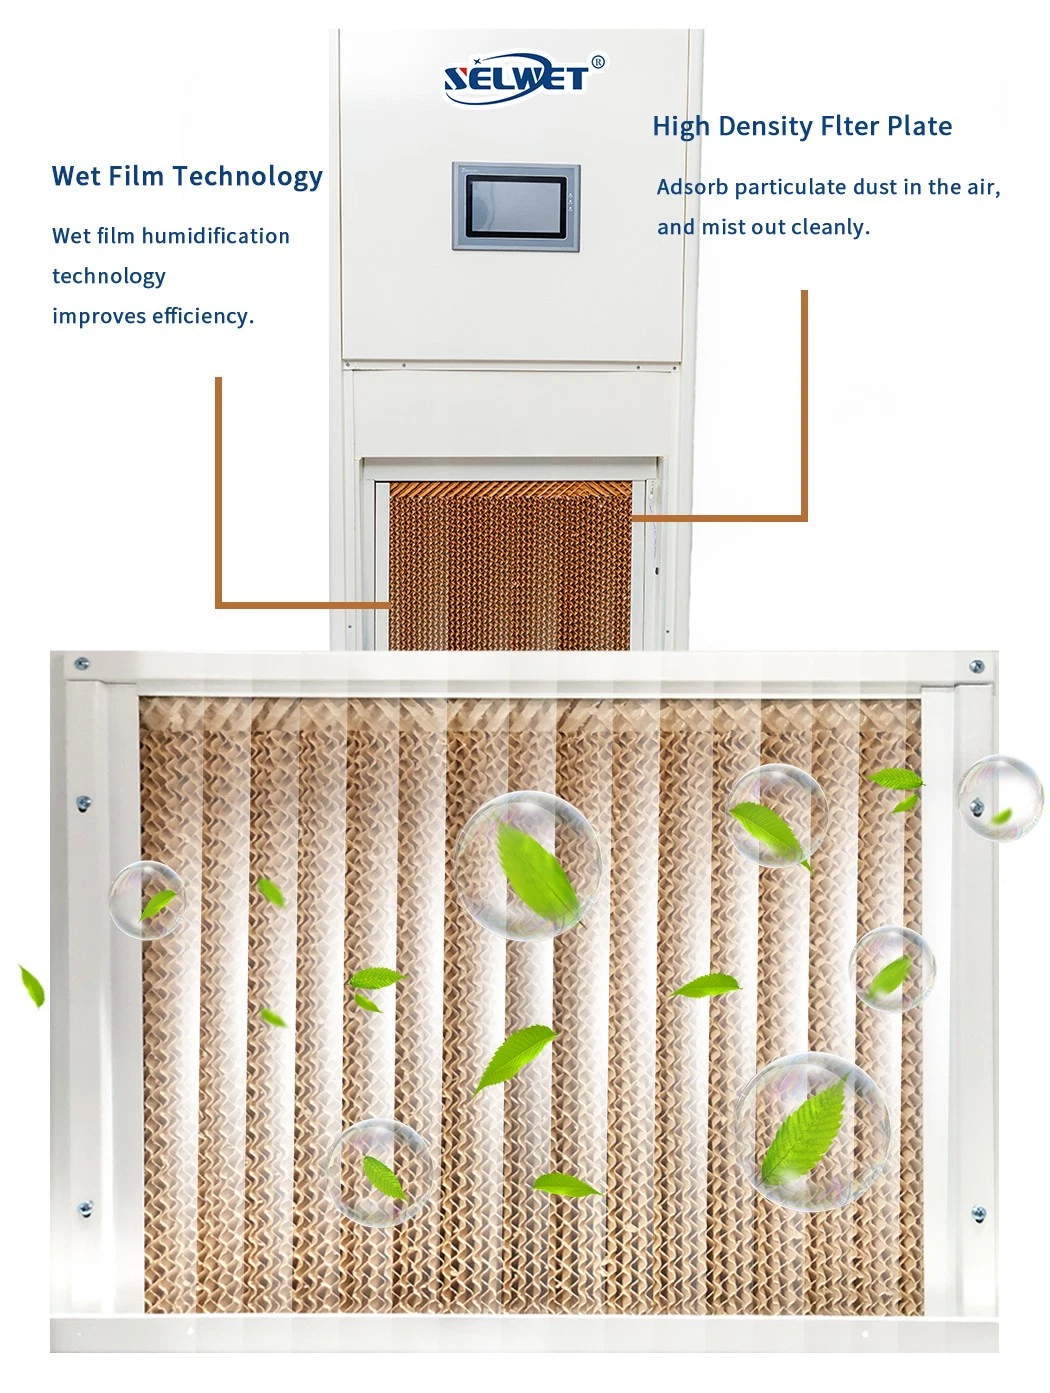 Green Environmental Protection Industrial Humidification Constant Humidity Purification Dehumidification Machine